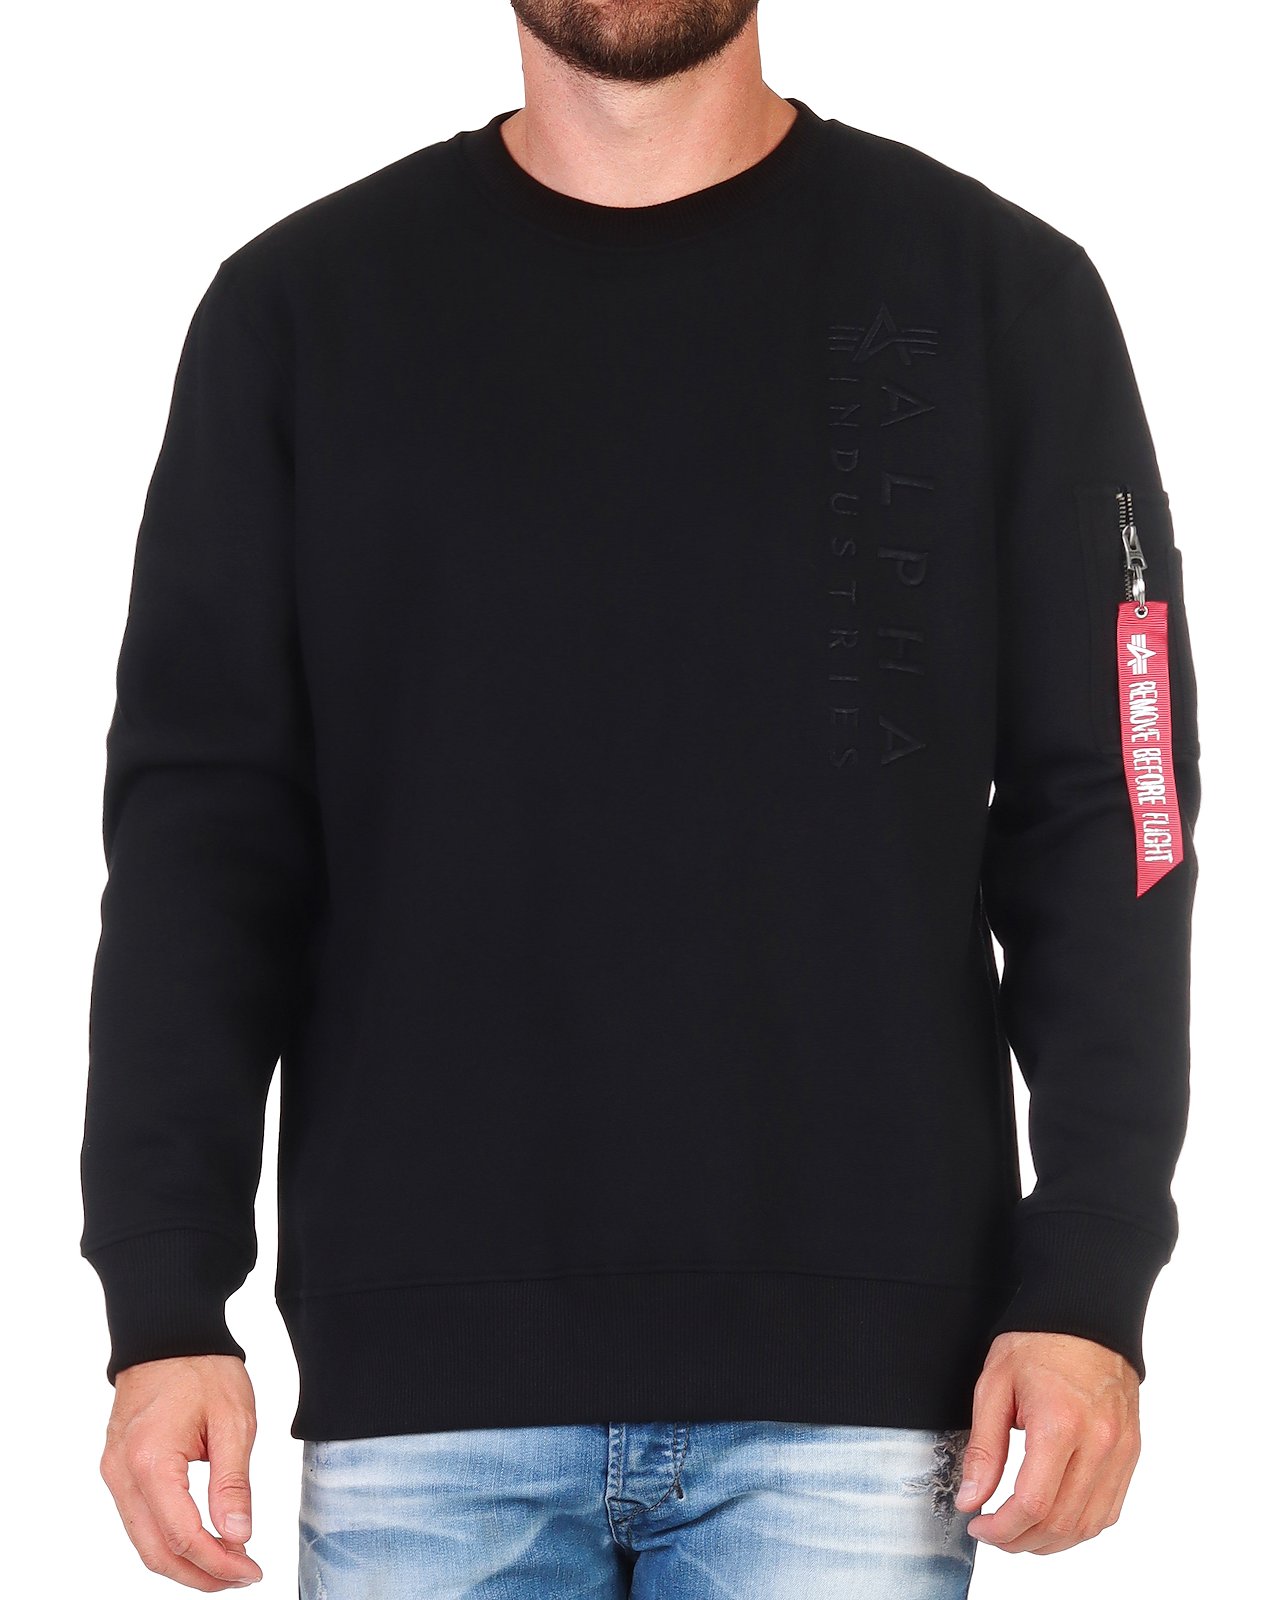 | Sweater Alpha Herren Company 138300 Lifestyle Sweatshirt Industries L.E.M.B. Alpha Marken | Industries EMB |